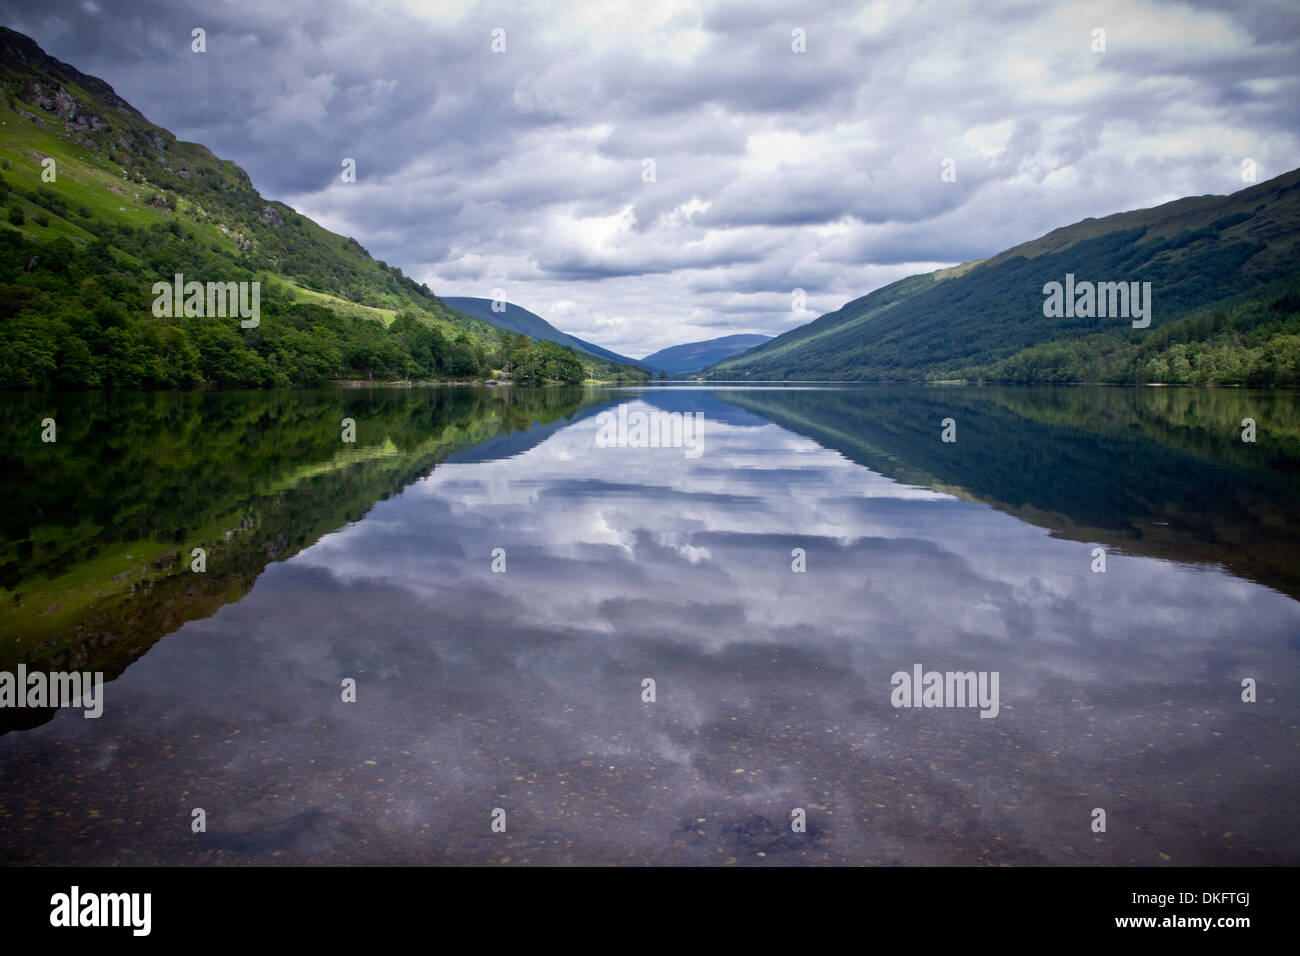 Loch Voil in the Loch Lomond and Trossachs National Park, Scotland Stock Photo